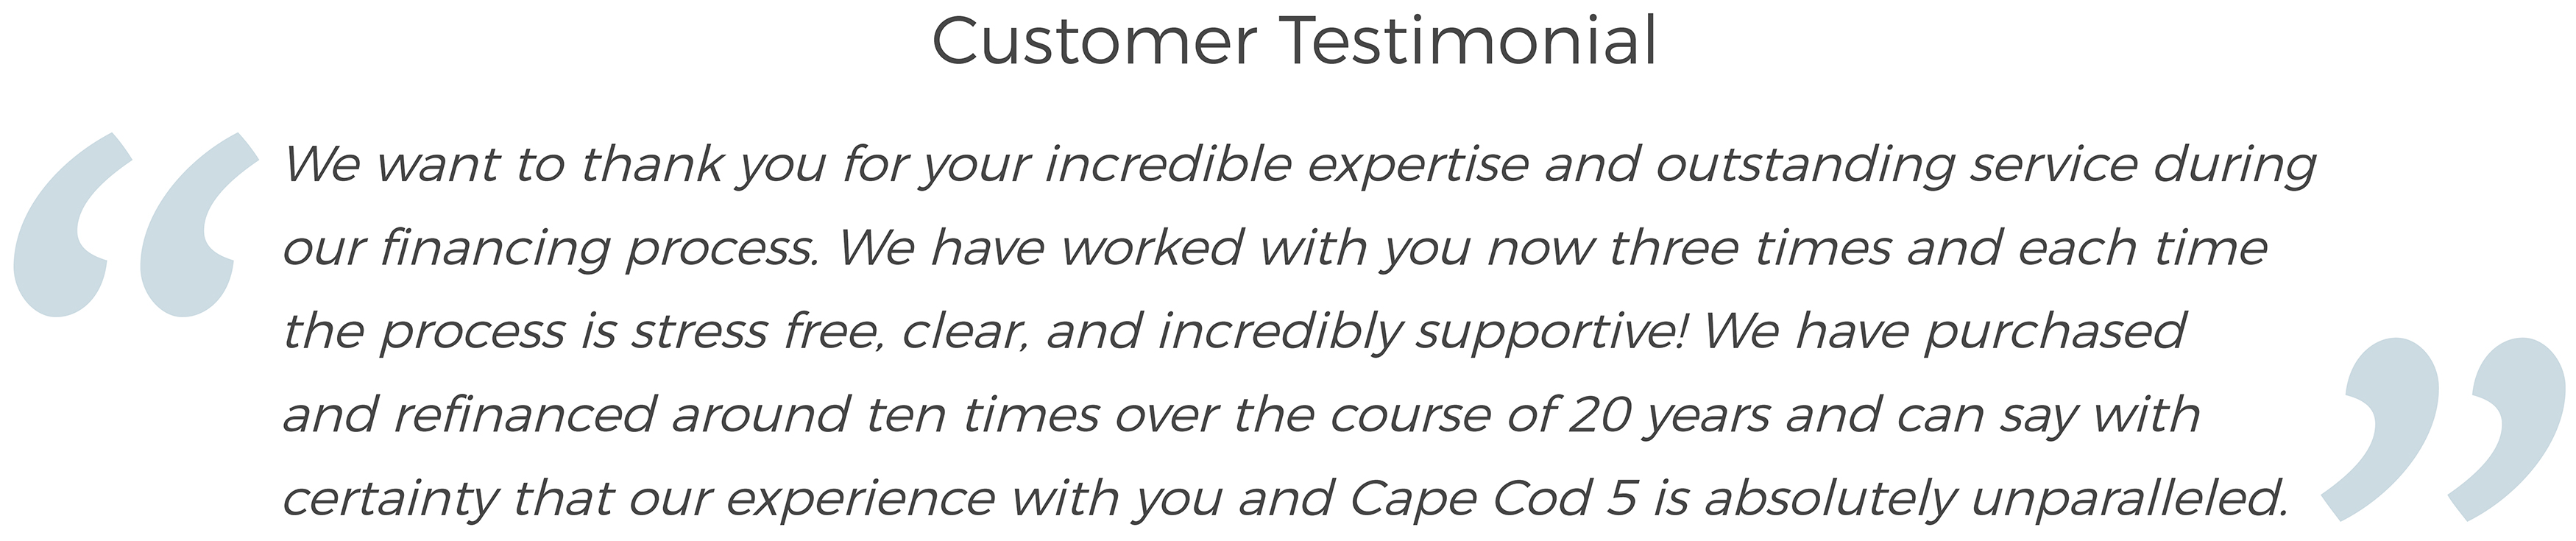 Customer testimonial #1